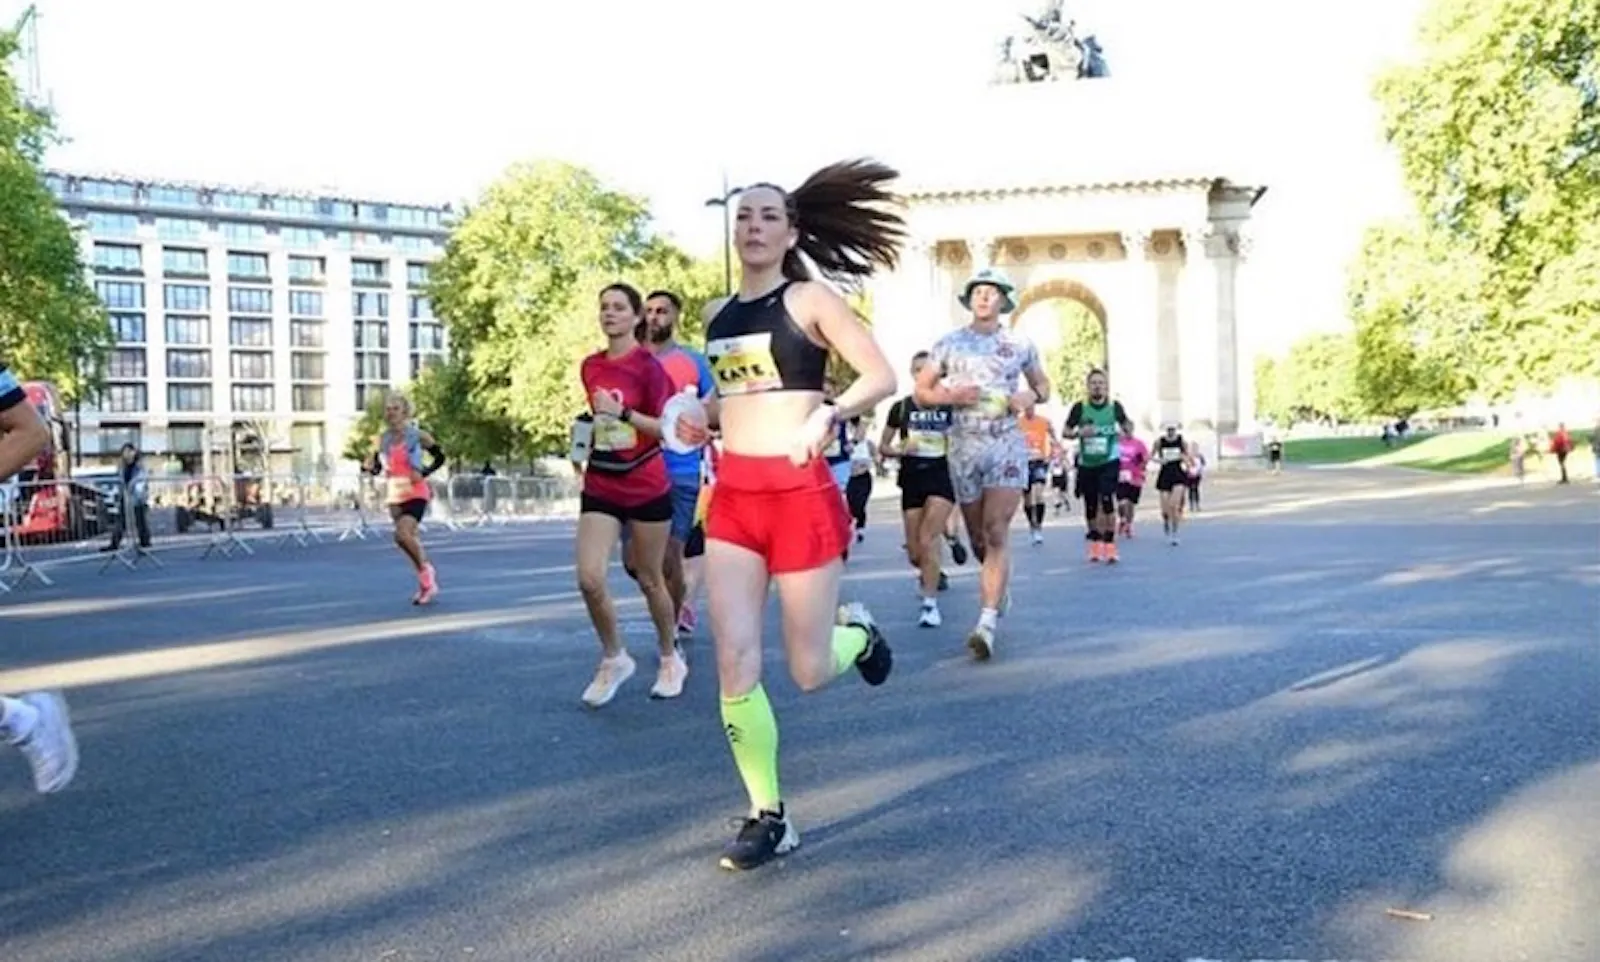 Kate Wescott running the Royal Parks half-marathon earlier this year